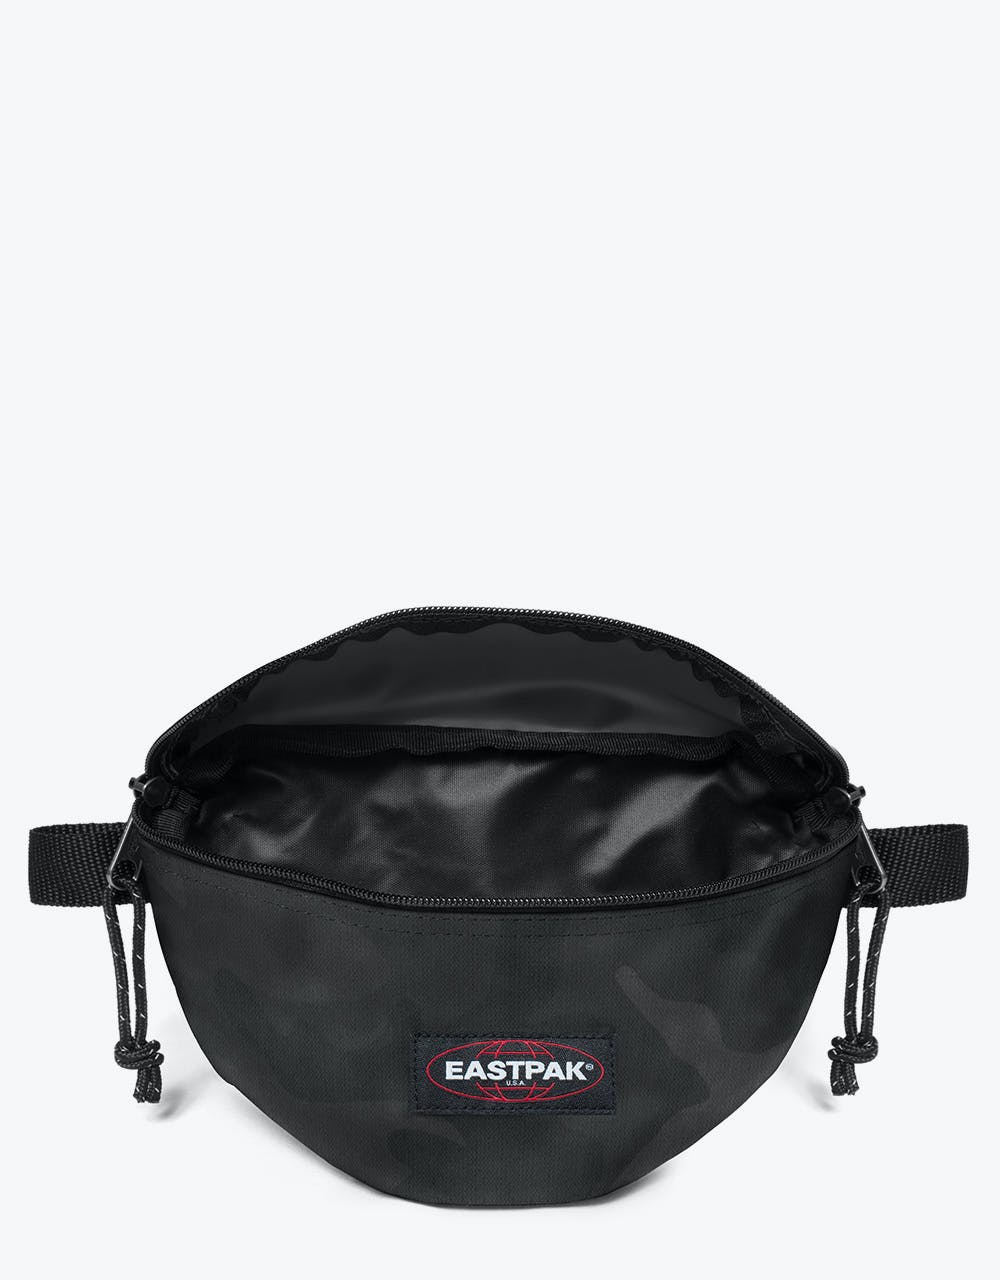 Eastpak Springer Cross Body Bag - Tonal Camo Dark